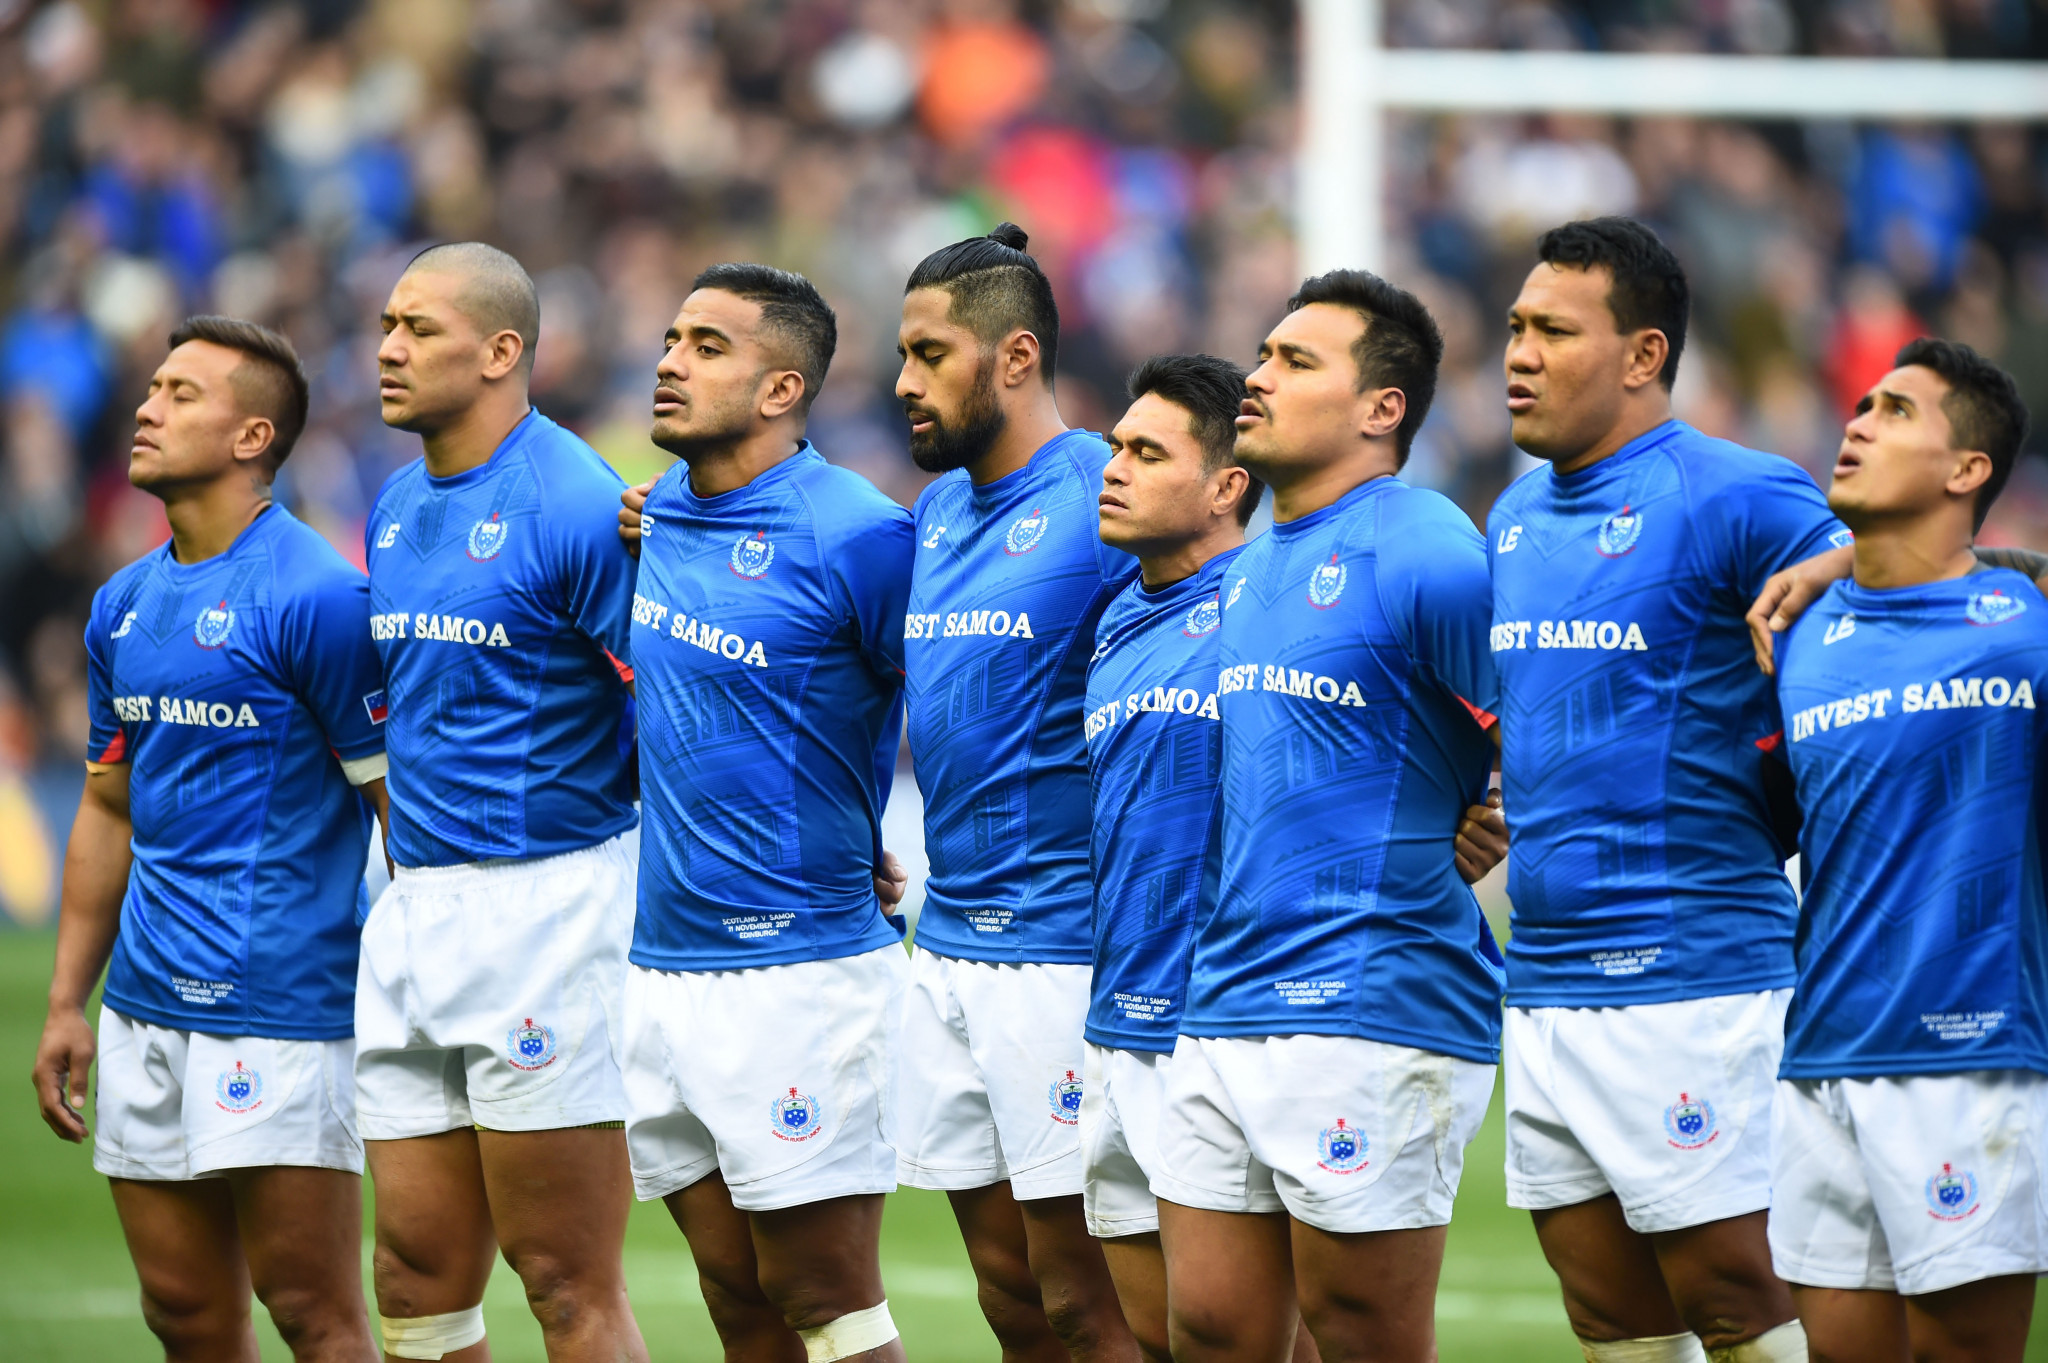 World Rugby deny Prime Minister's claim that Samoa is bankrupt